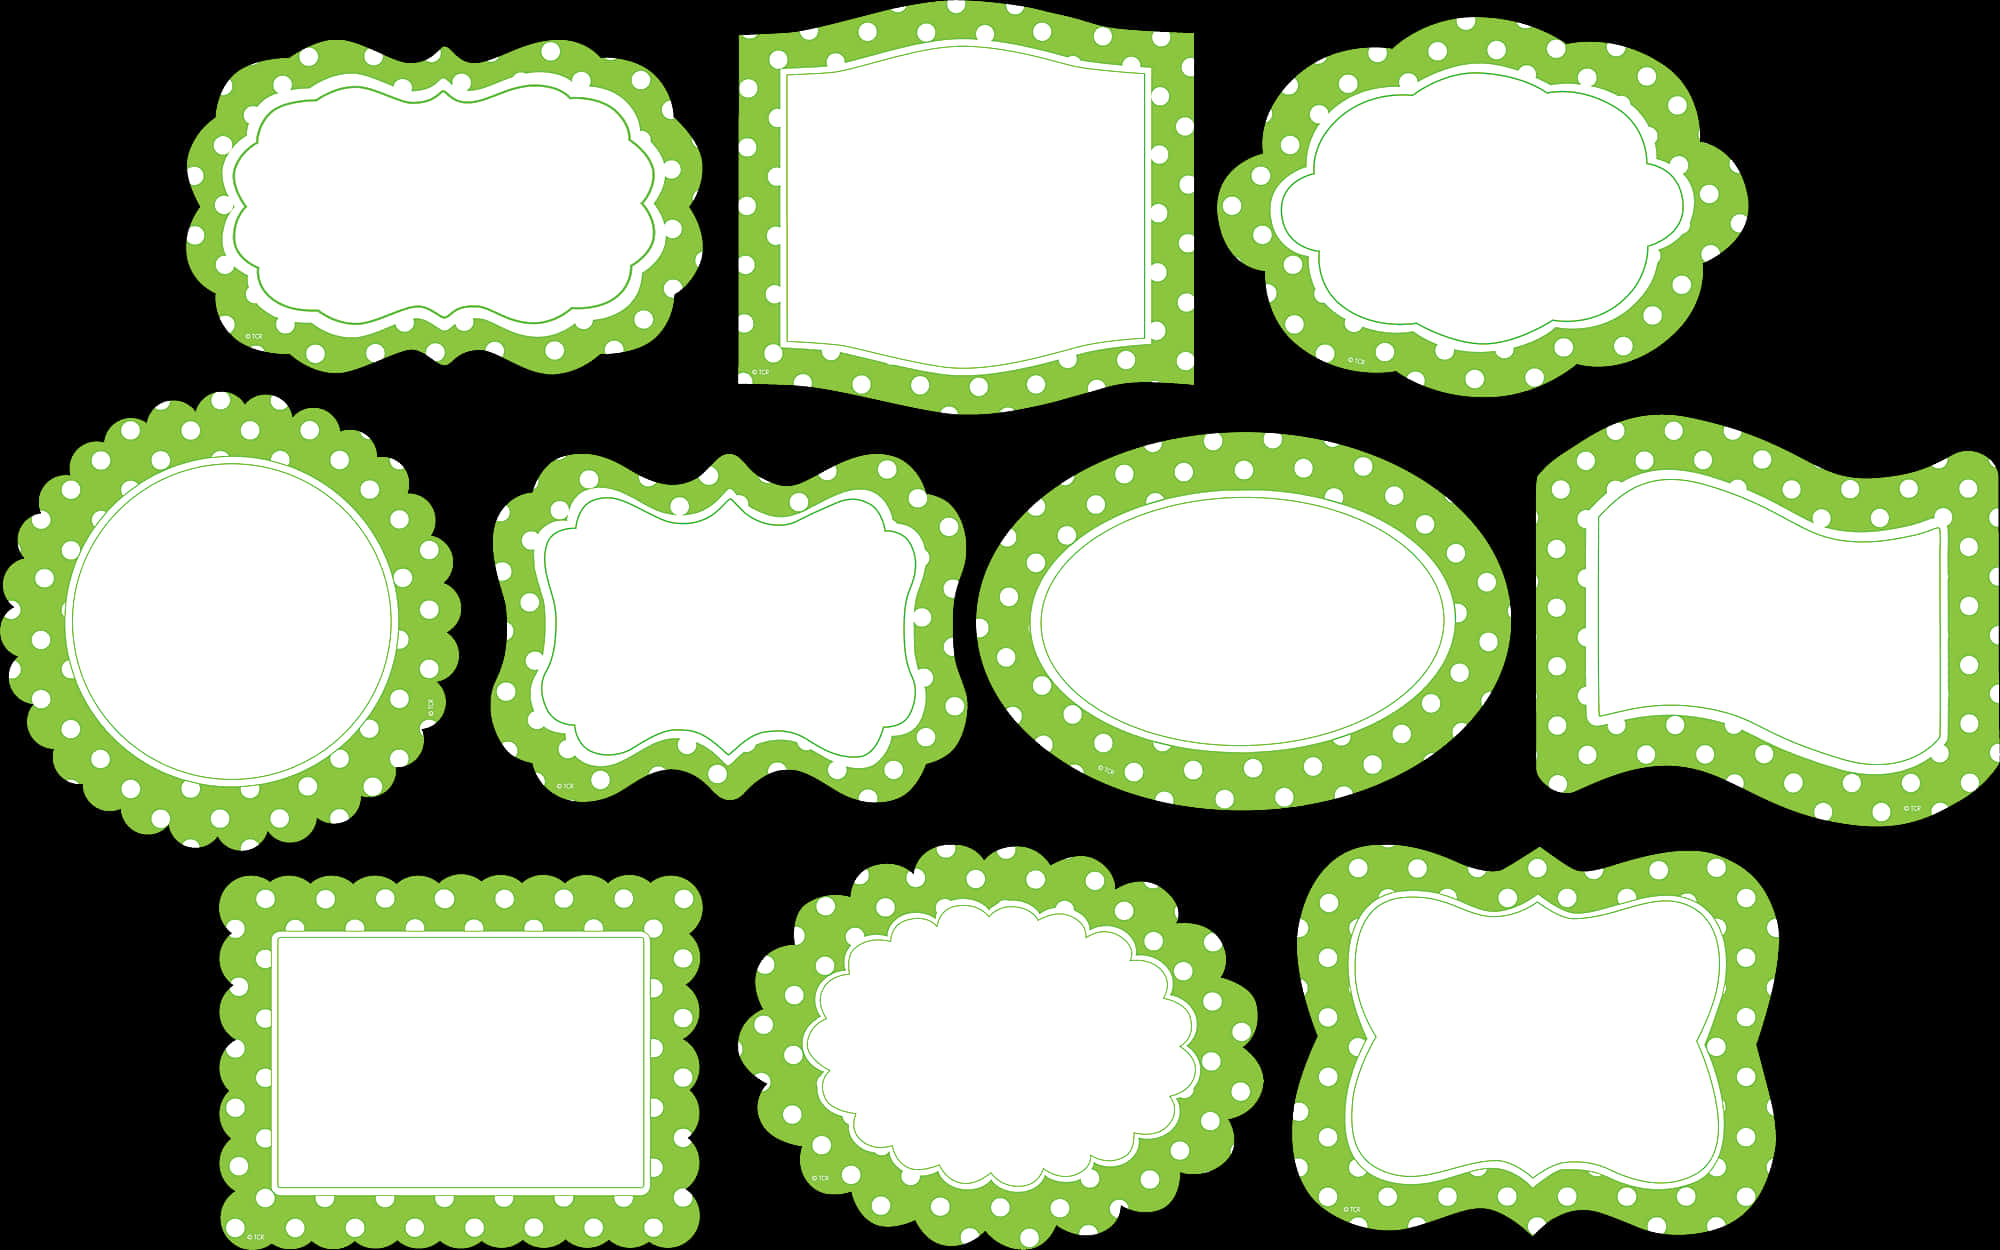 Green Polka Dot Frames Collection PNG image